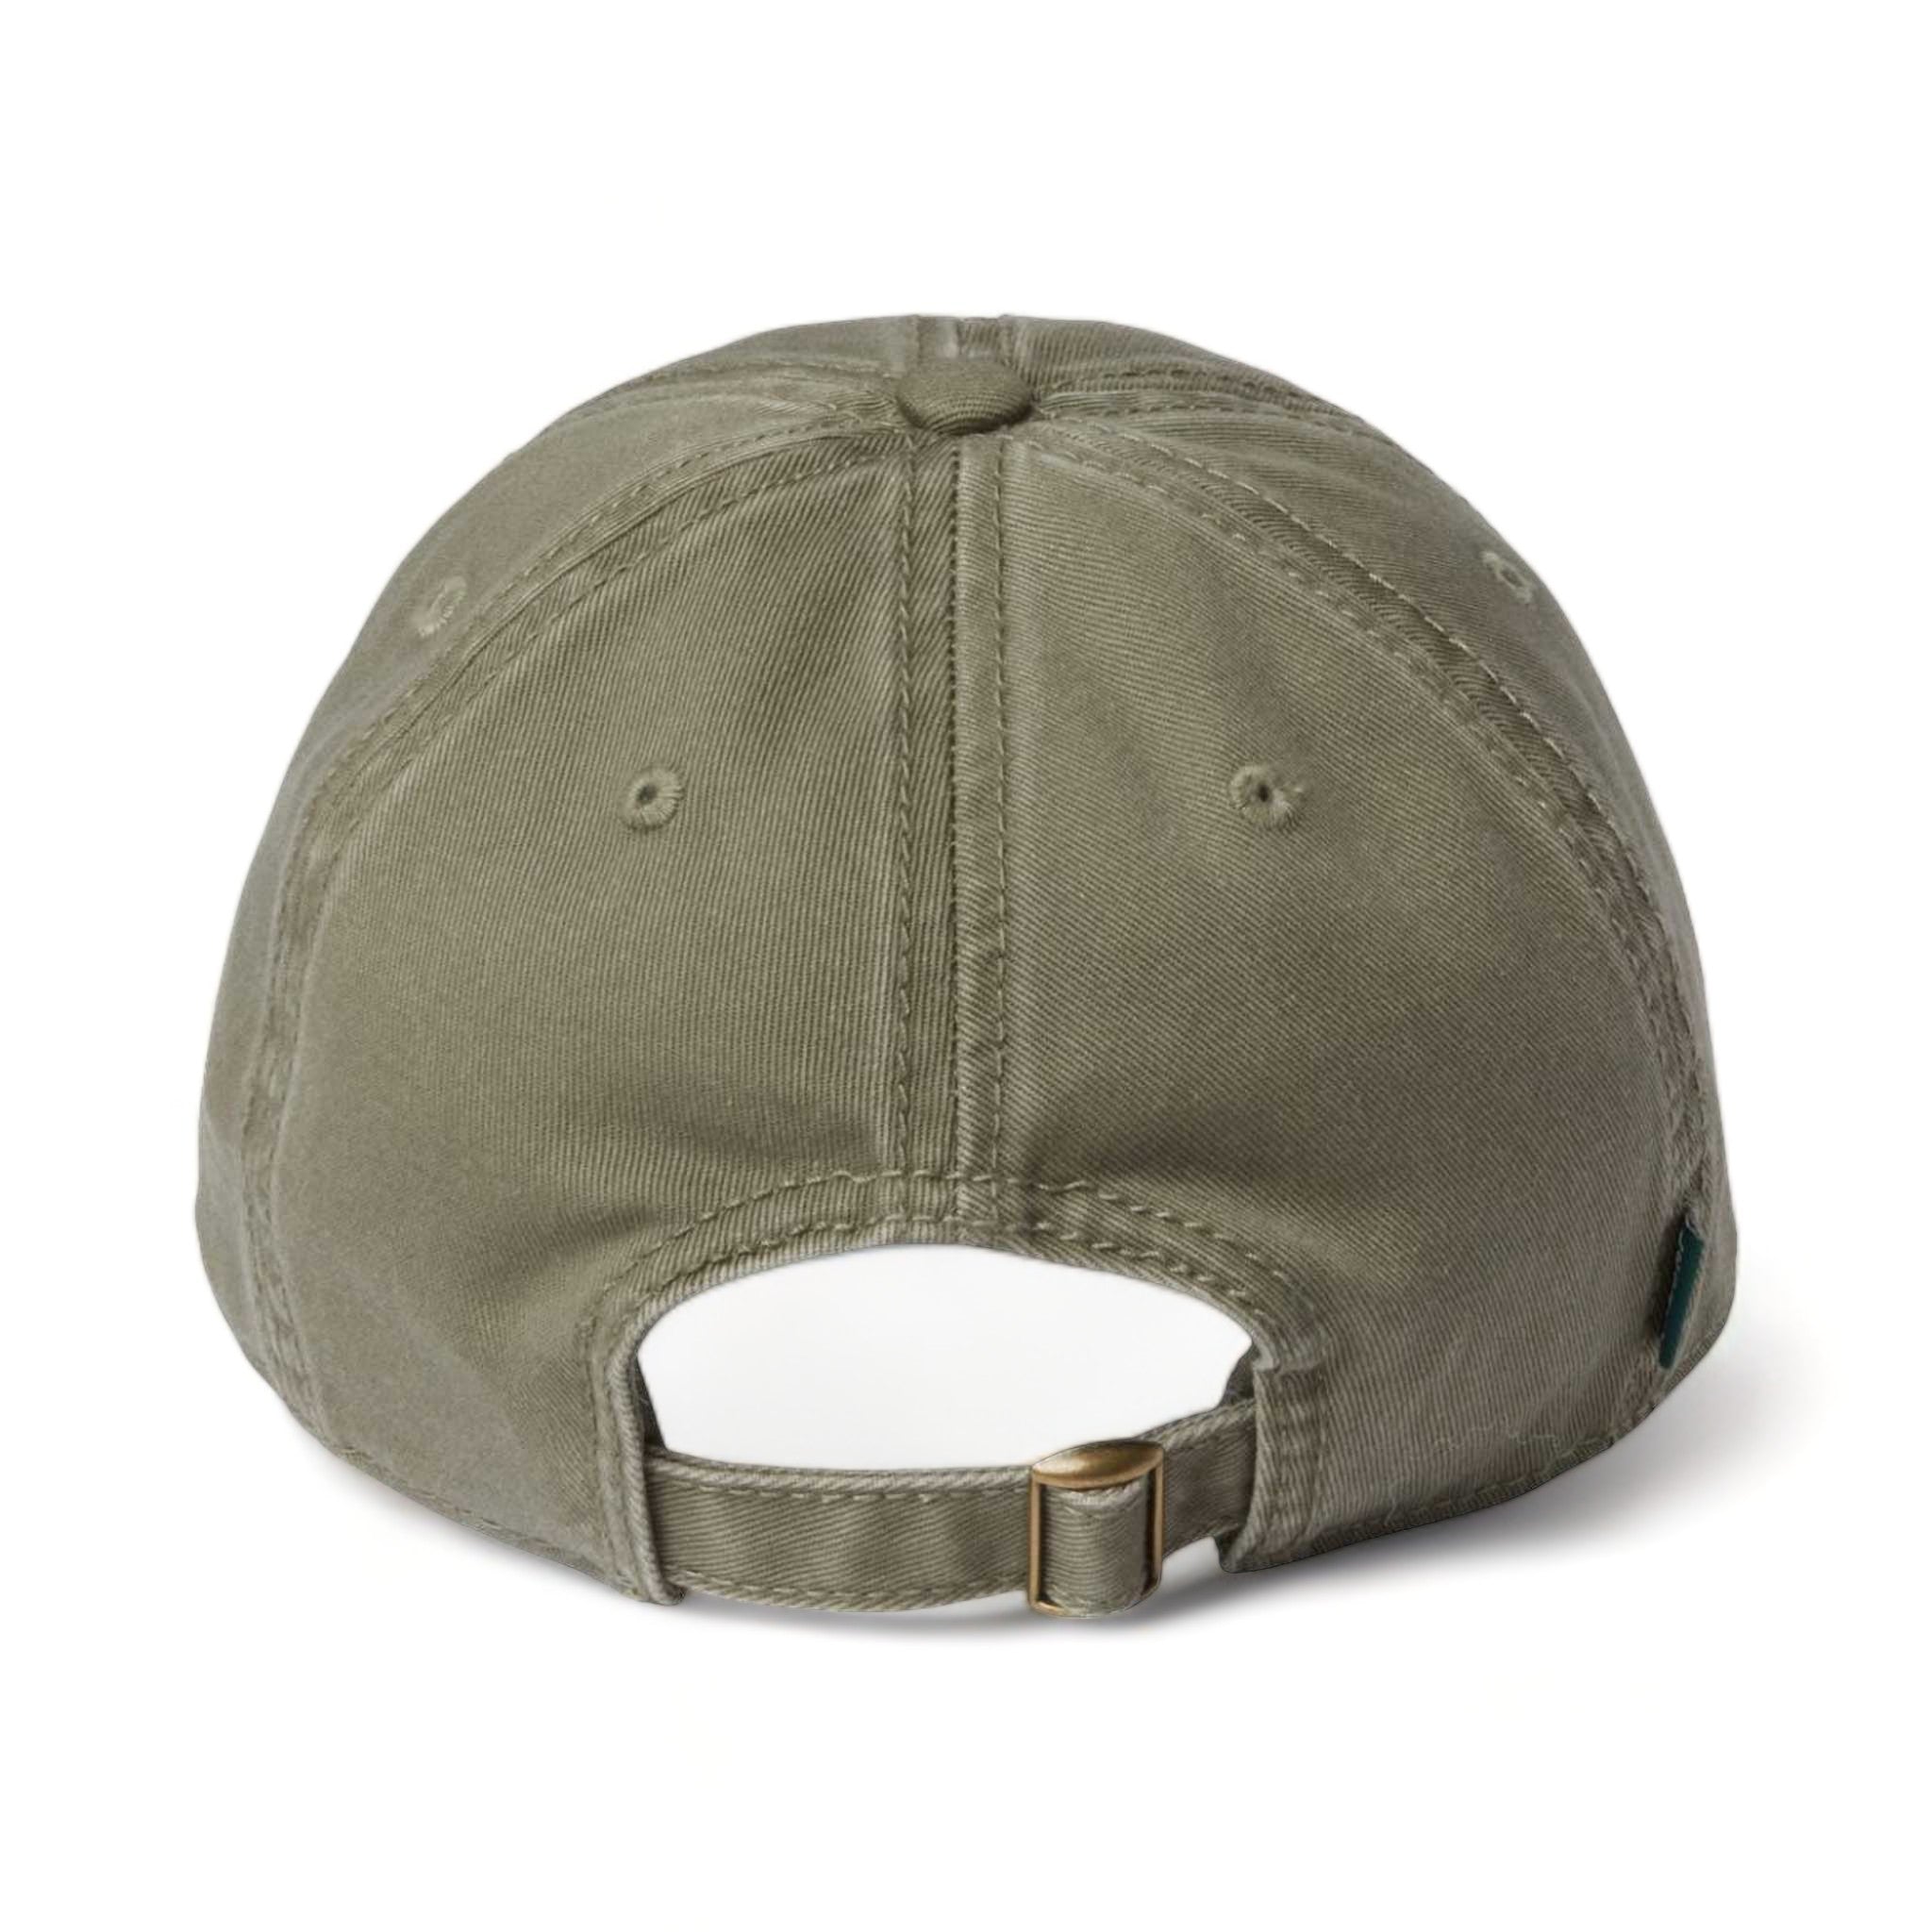 Back view of LEGACY EZA custom hat in moss green